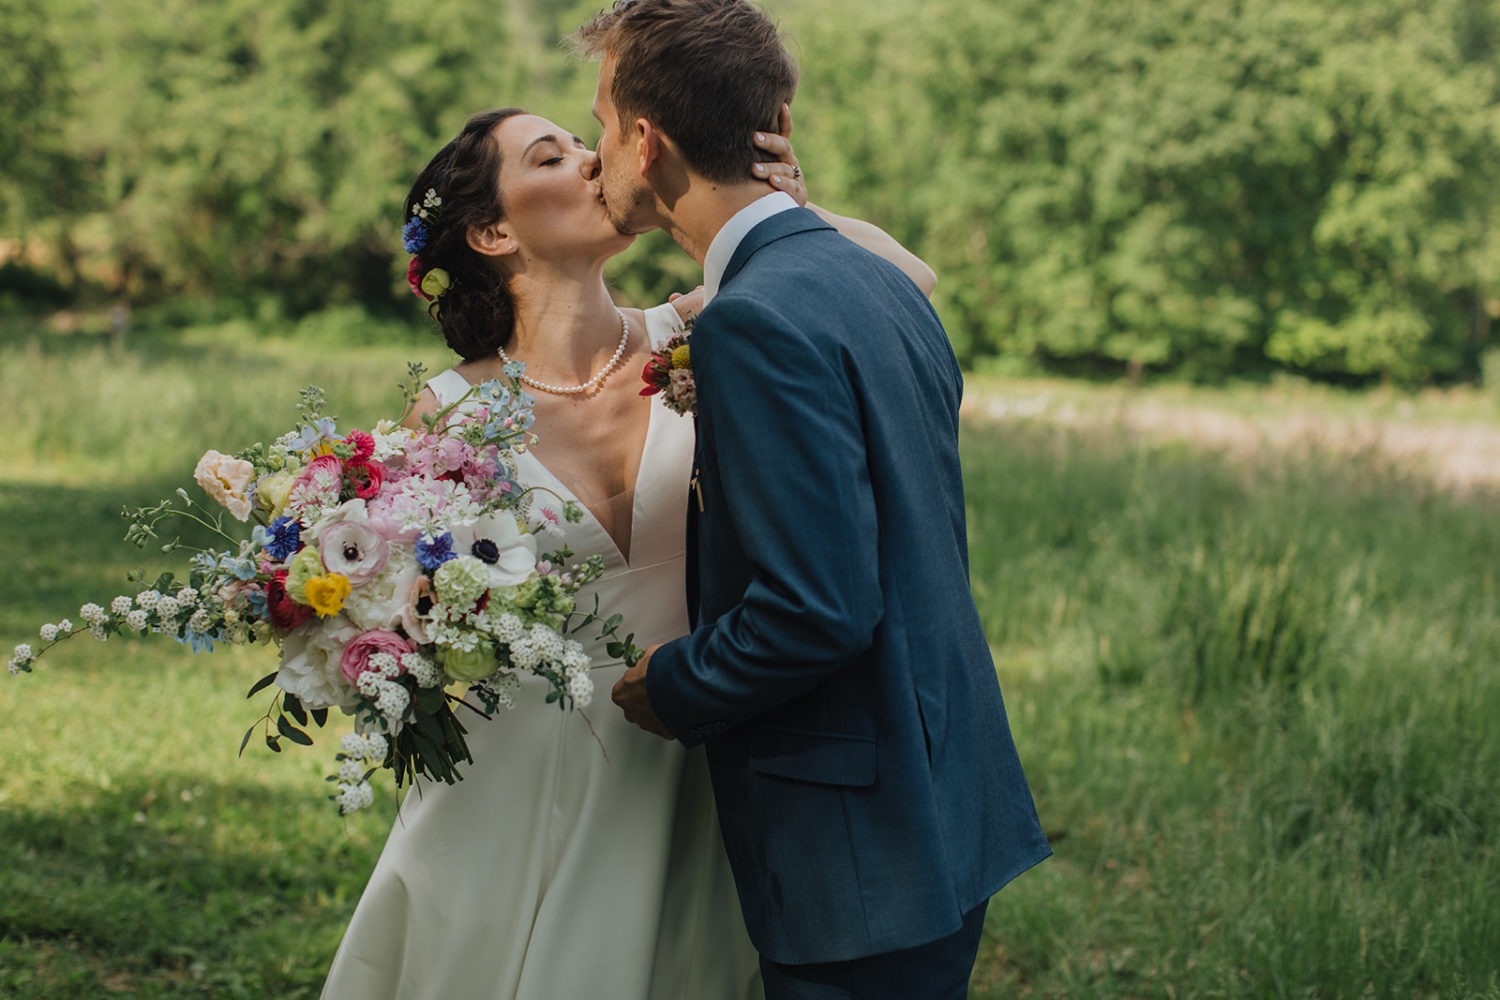 Couple kisses holding wedding bouquet at nature wedding venue